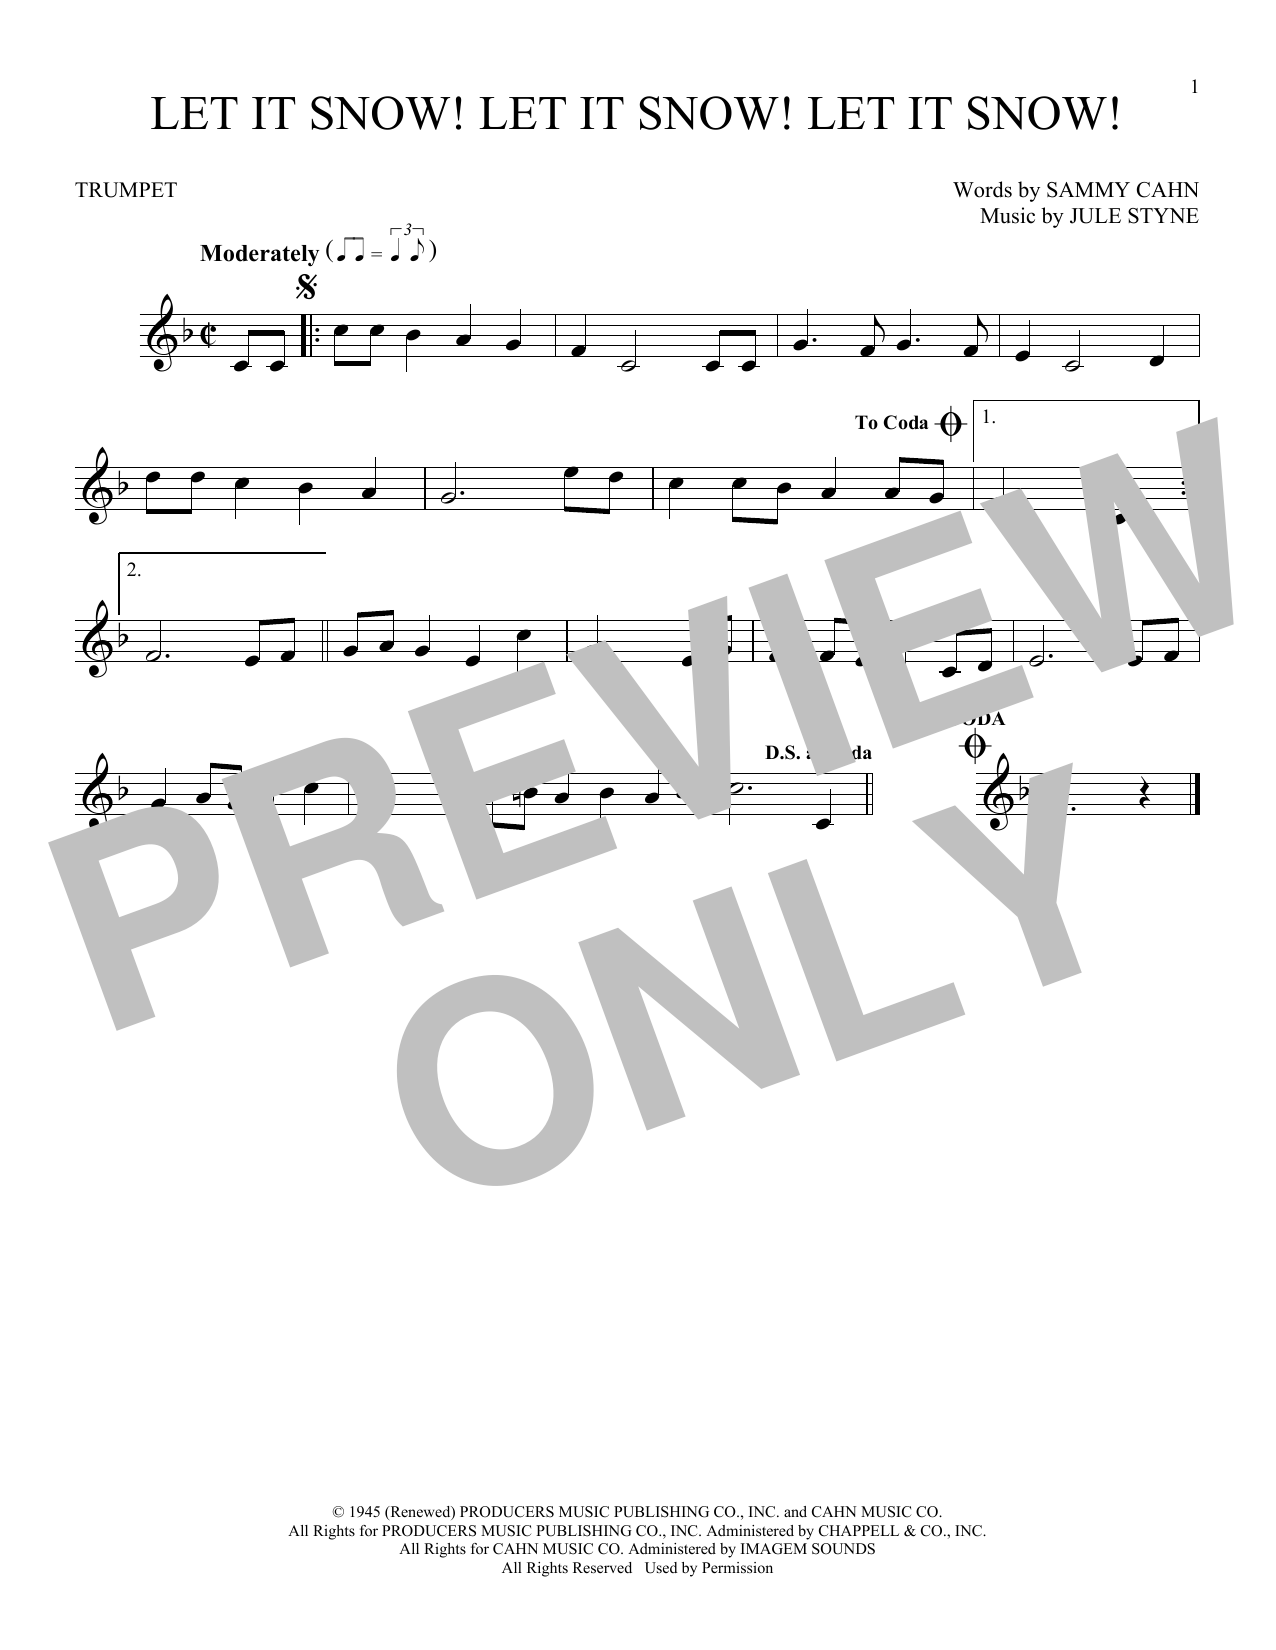 Sammy Cahn & Julie Styne Let It Snow! Let It Snow! Let It Snow! Sheet Music Notes & Chords for Trumpet - Download or Print PDF